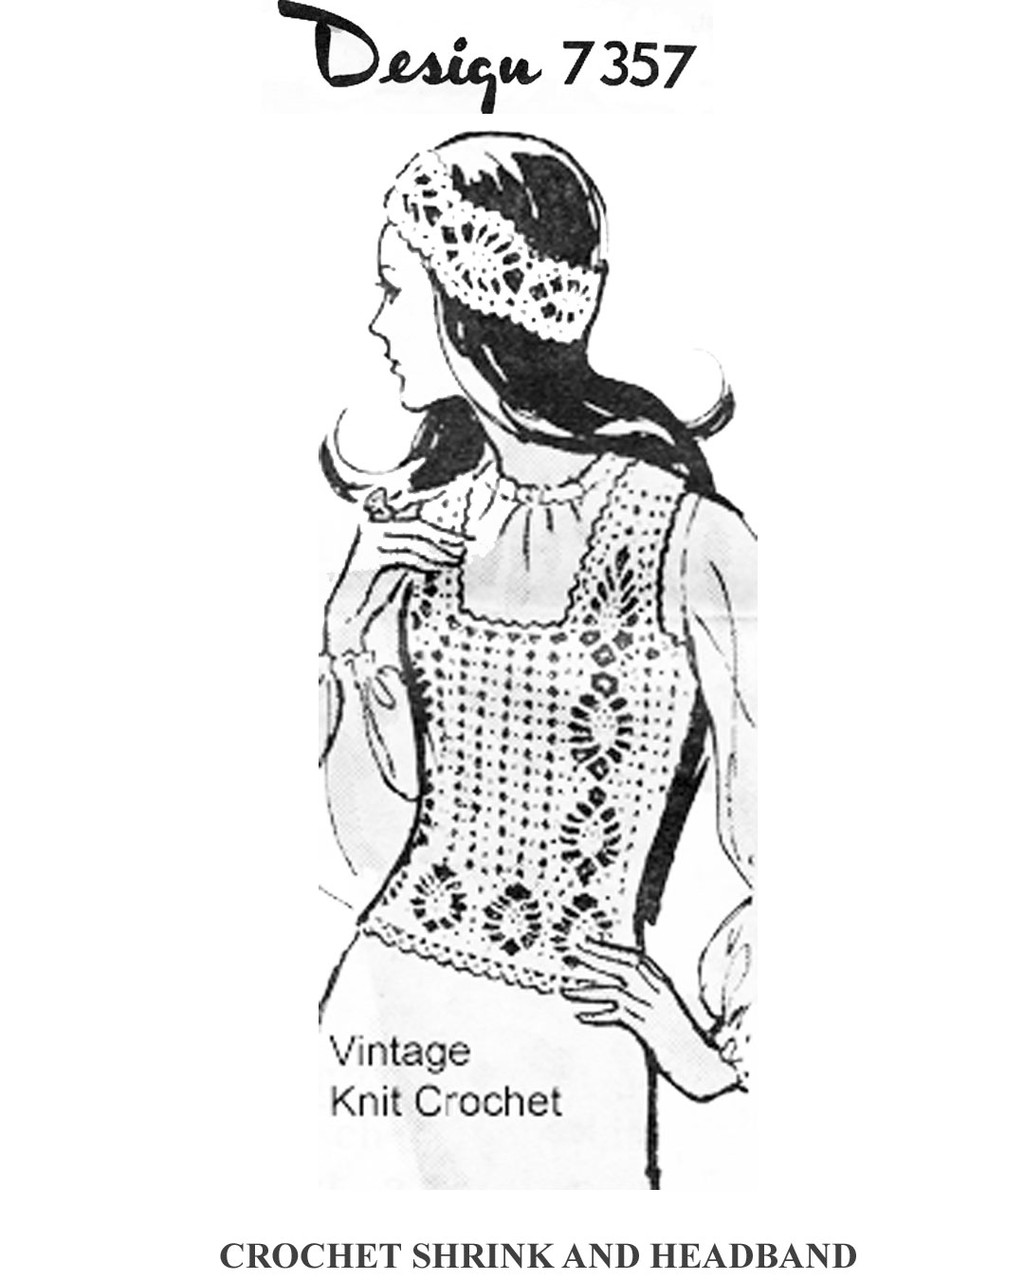 Crochet Sleeveless Top Headband Pattern Design 7357